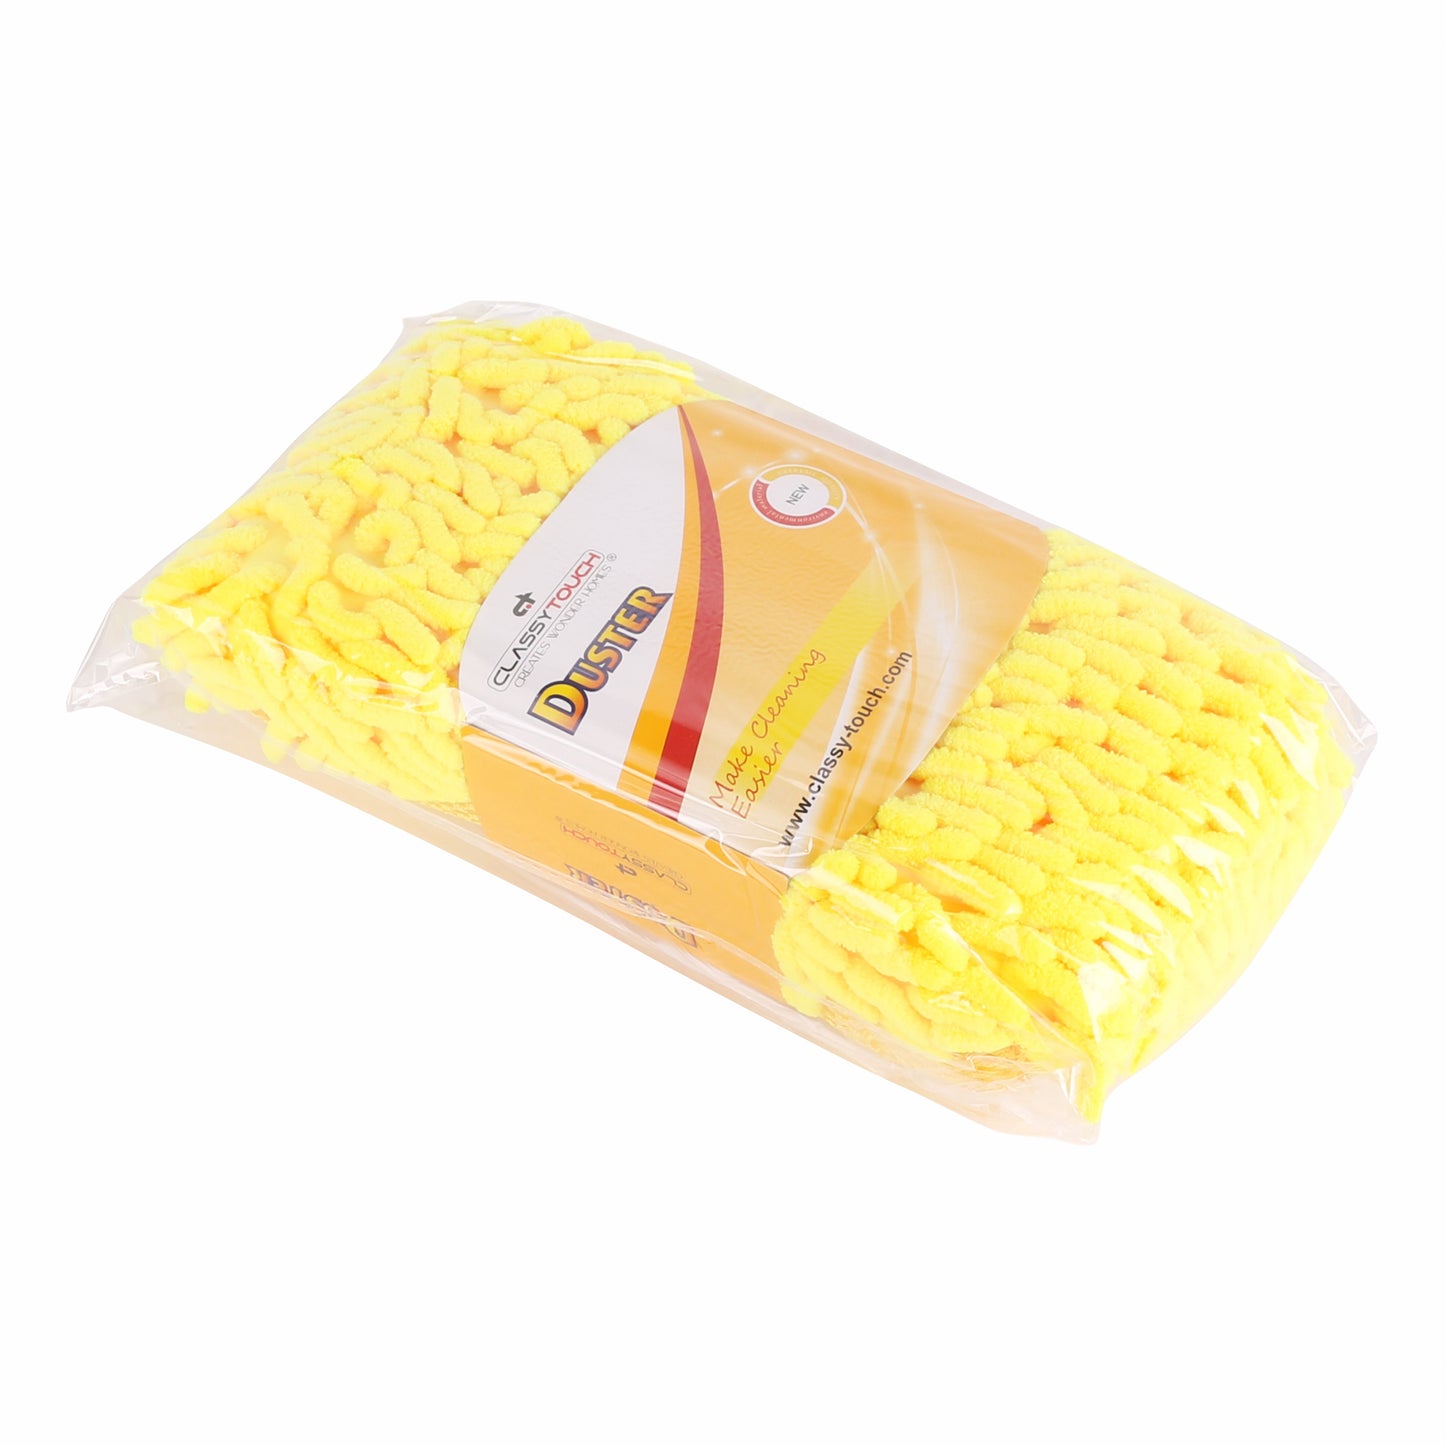 Classy Touch - Sponge Duster (Ct-0600) Yellow - Ghar Sajawat